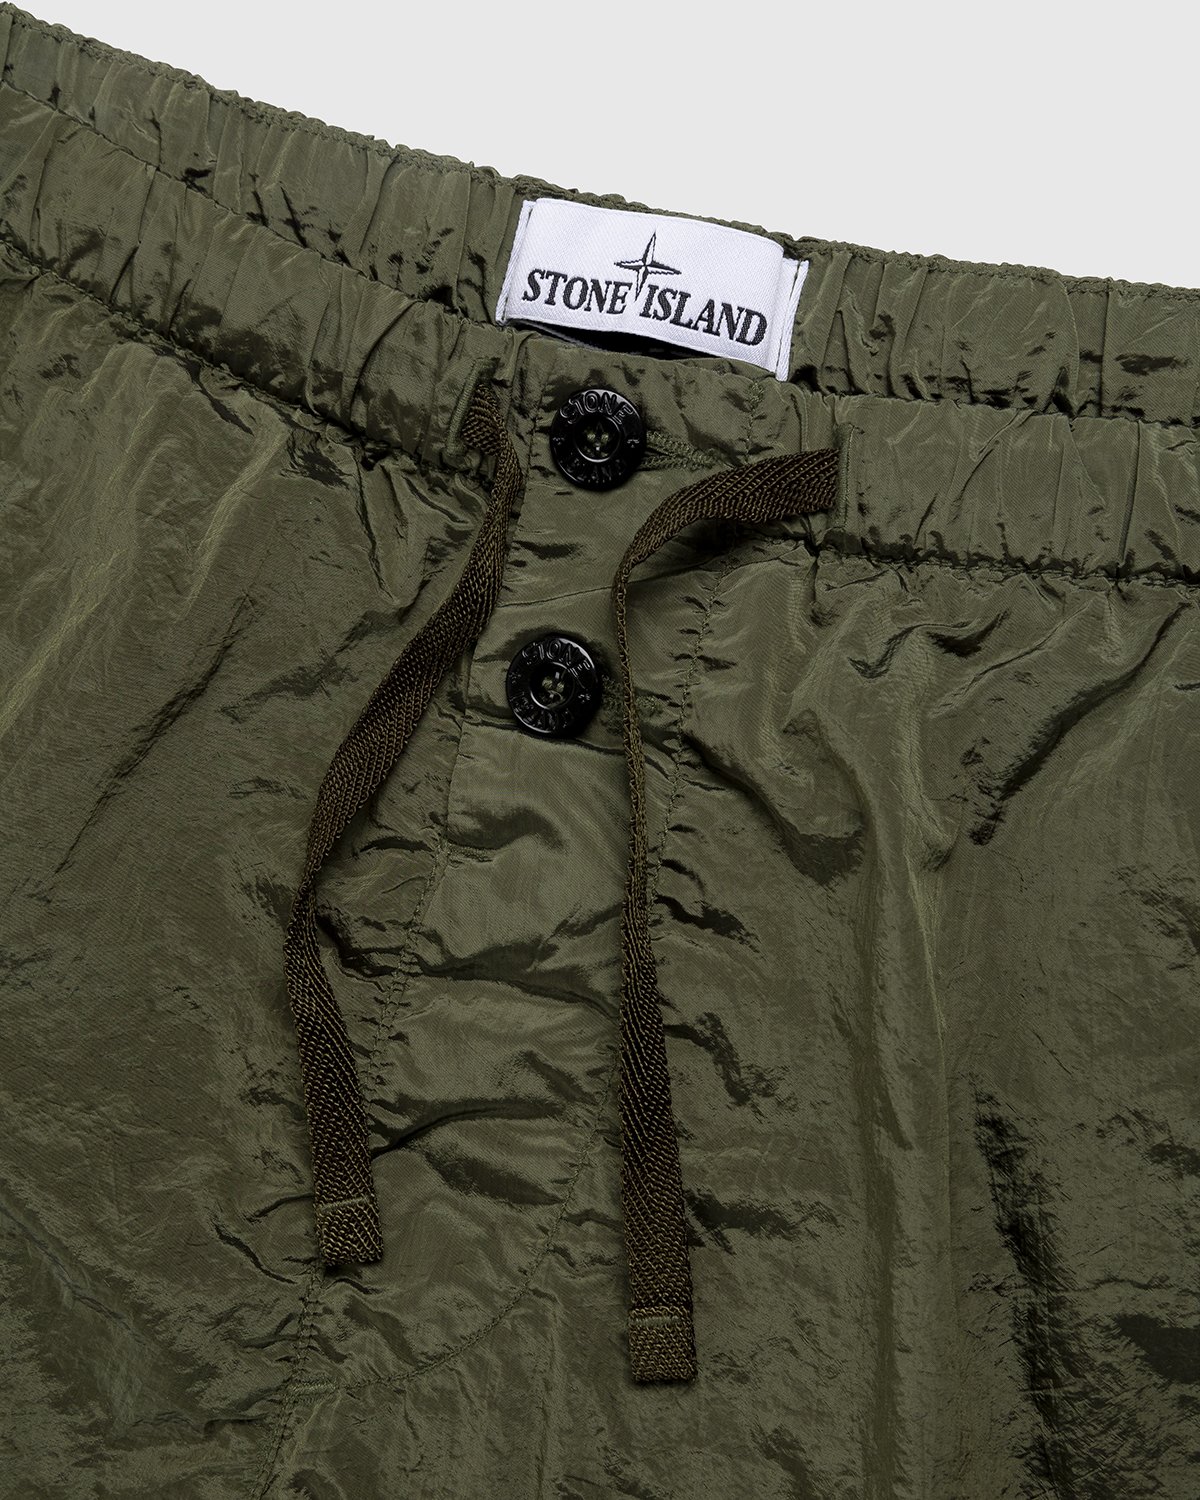 Stone Island - B0643 Nylon Metal Bermuda Shorts Olive - Clothing - Green - Image 4